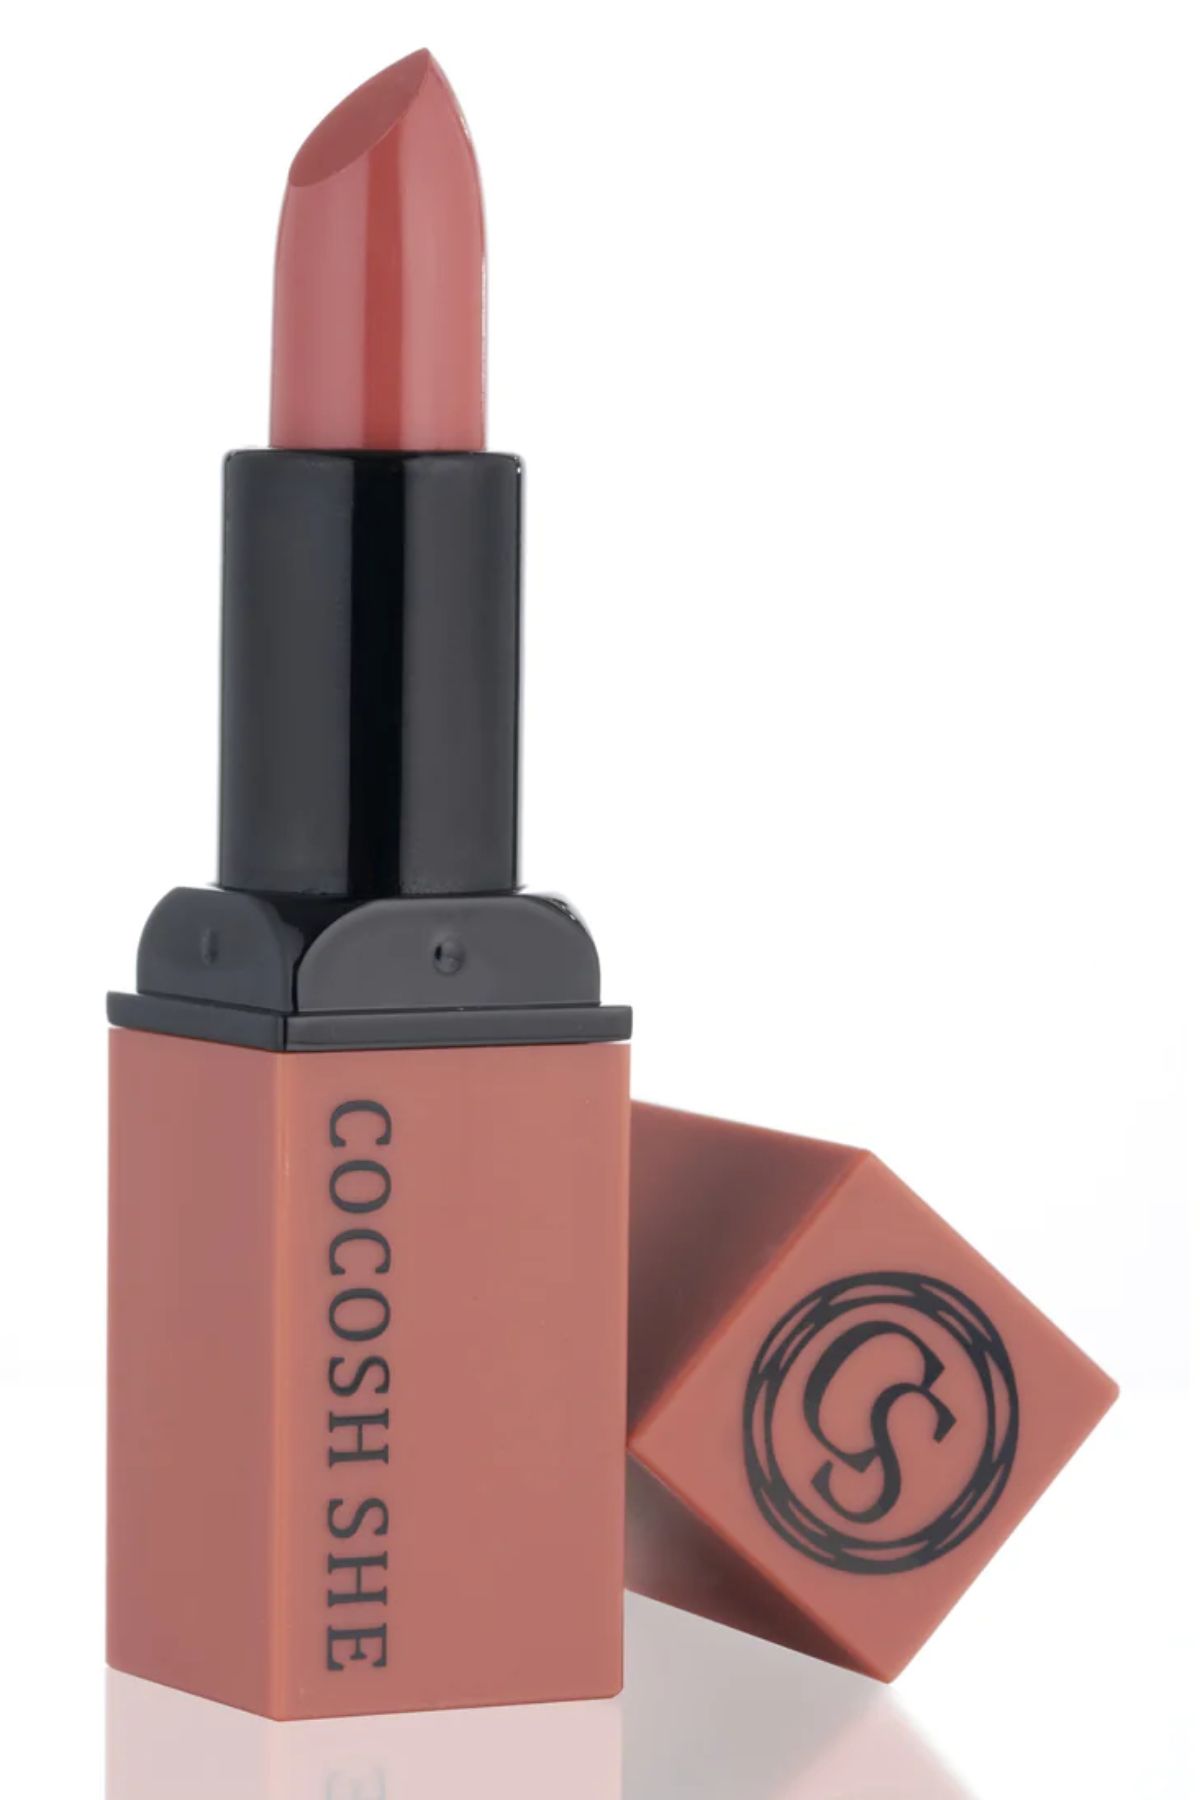 Cocosh She Color Creamy Lipstick Ruj 06 Latte, Nemlendirici Etki, Kremsi Formül, Yumuşak Bitişli